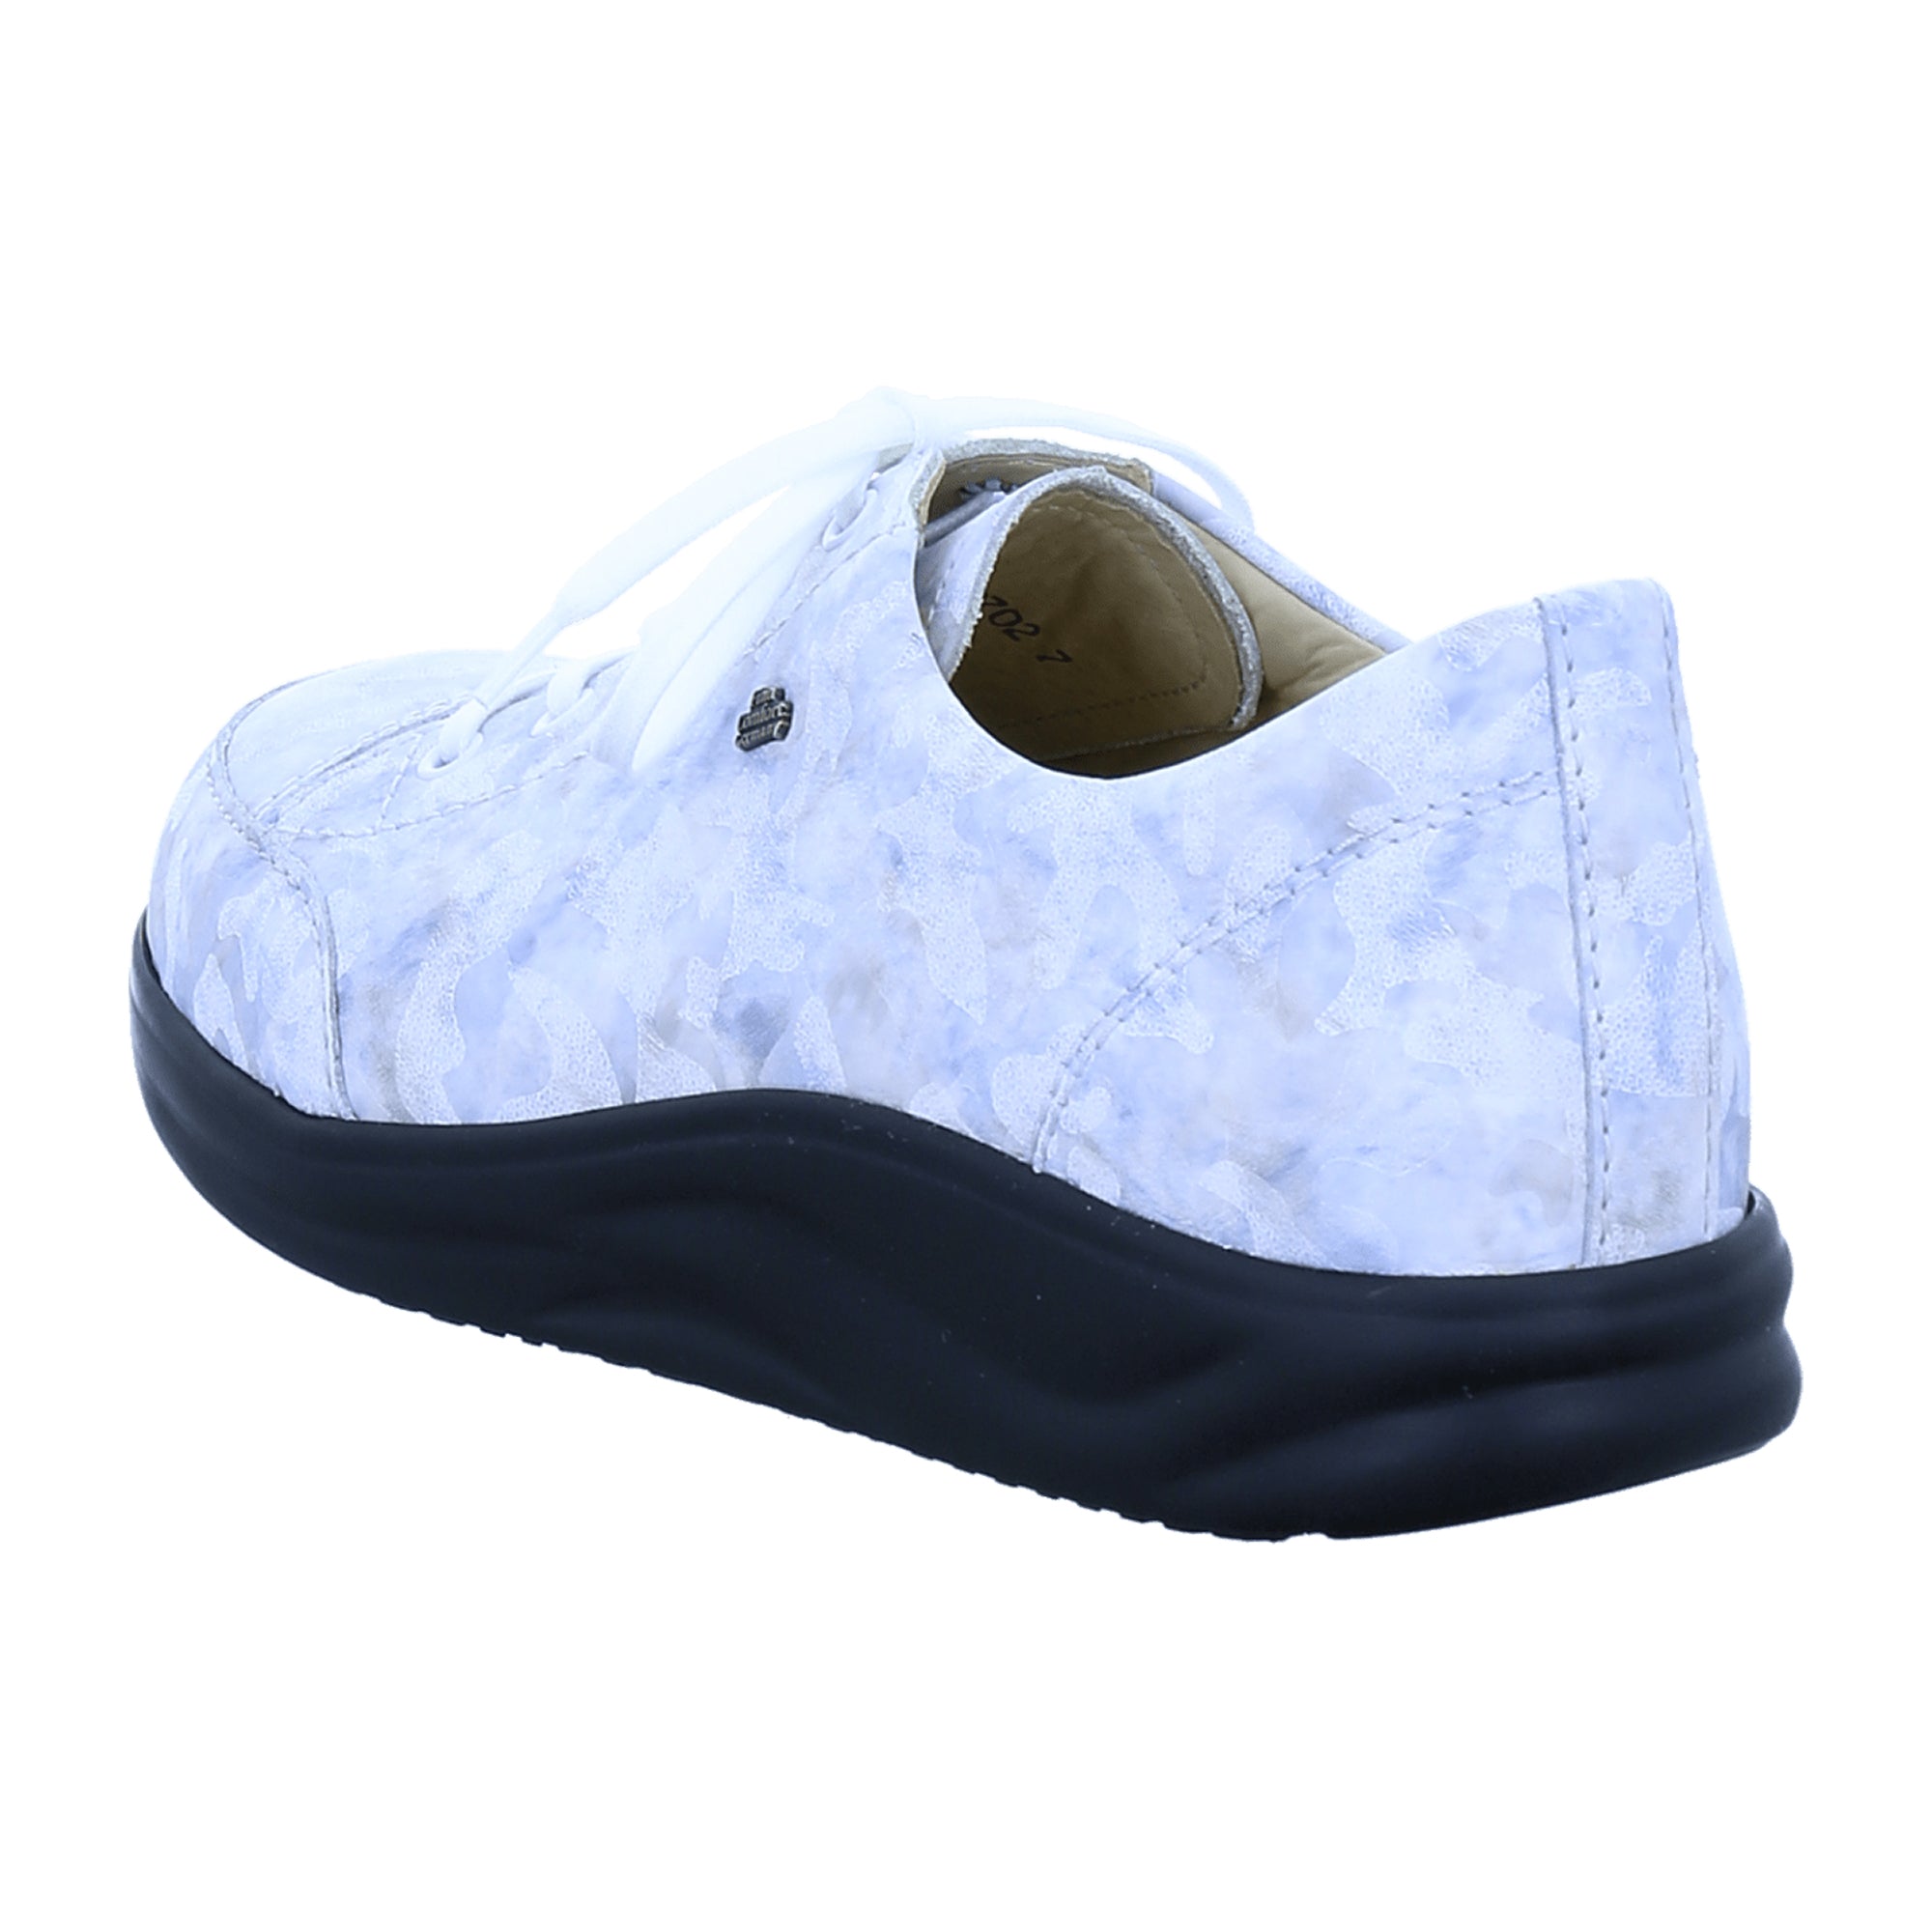 Finn Comfort Ikebukuro Women's Orthopedic Walking Shoes - Trendy White